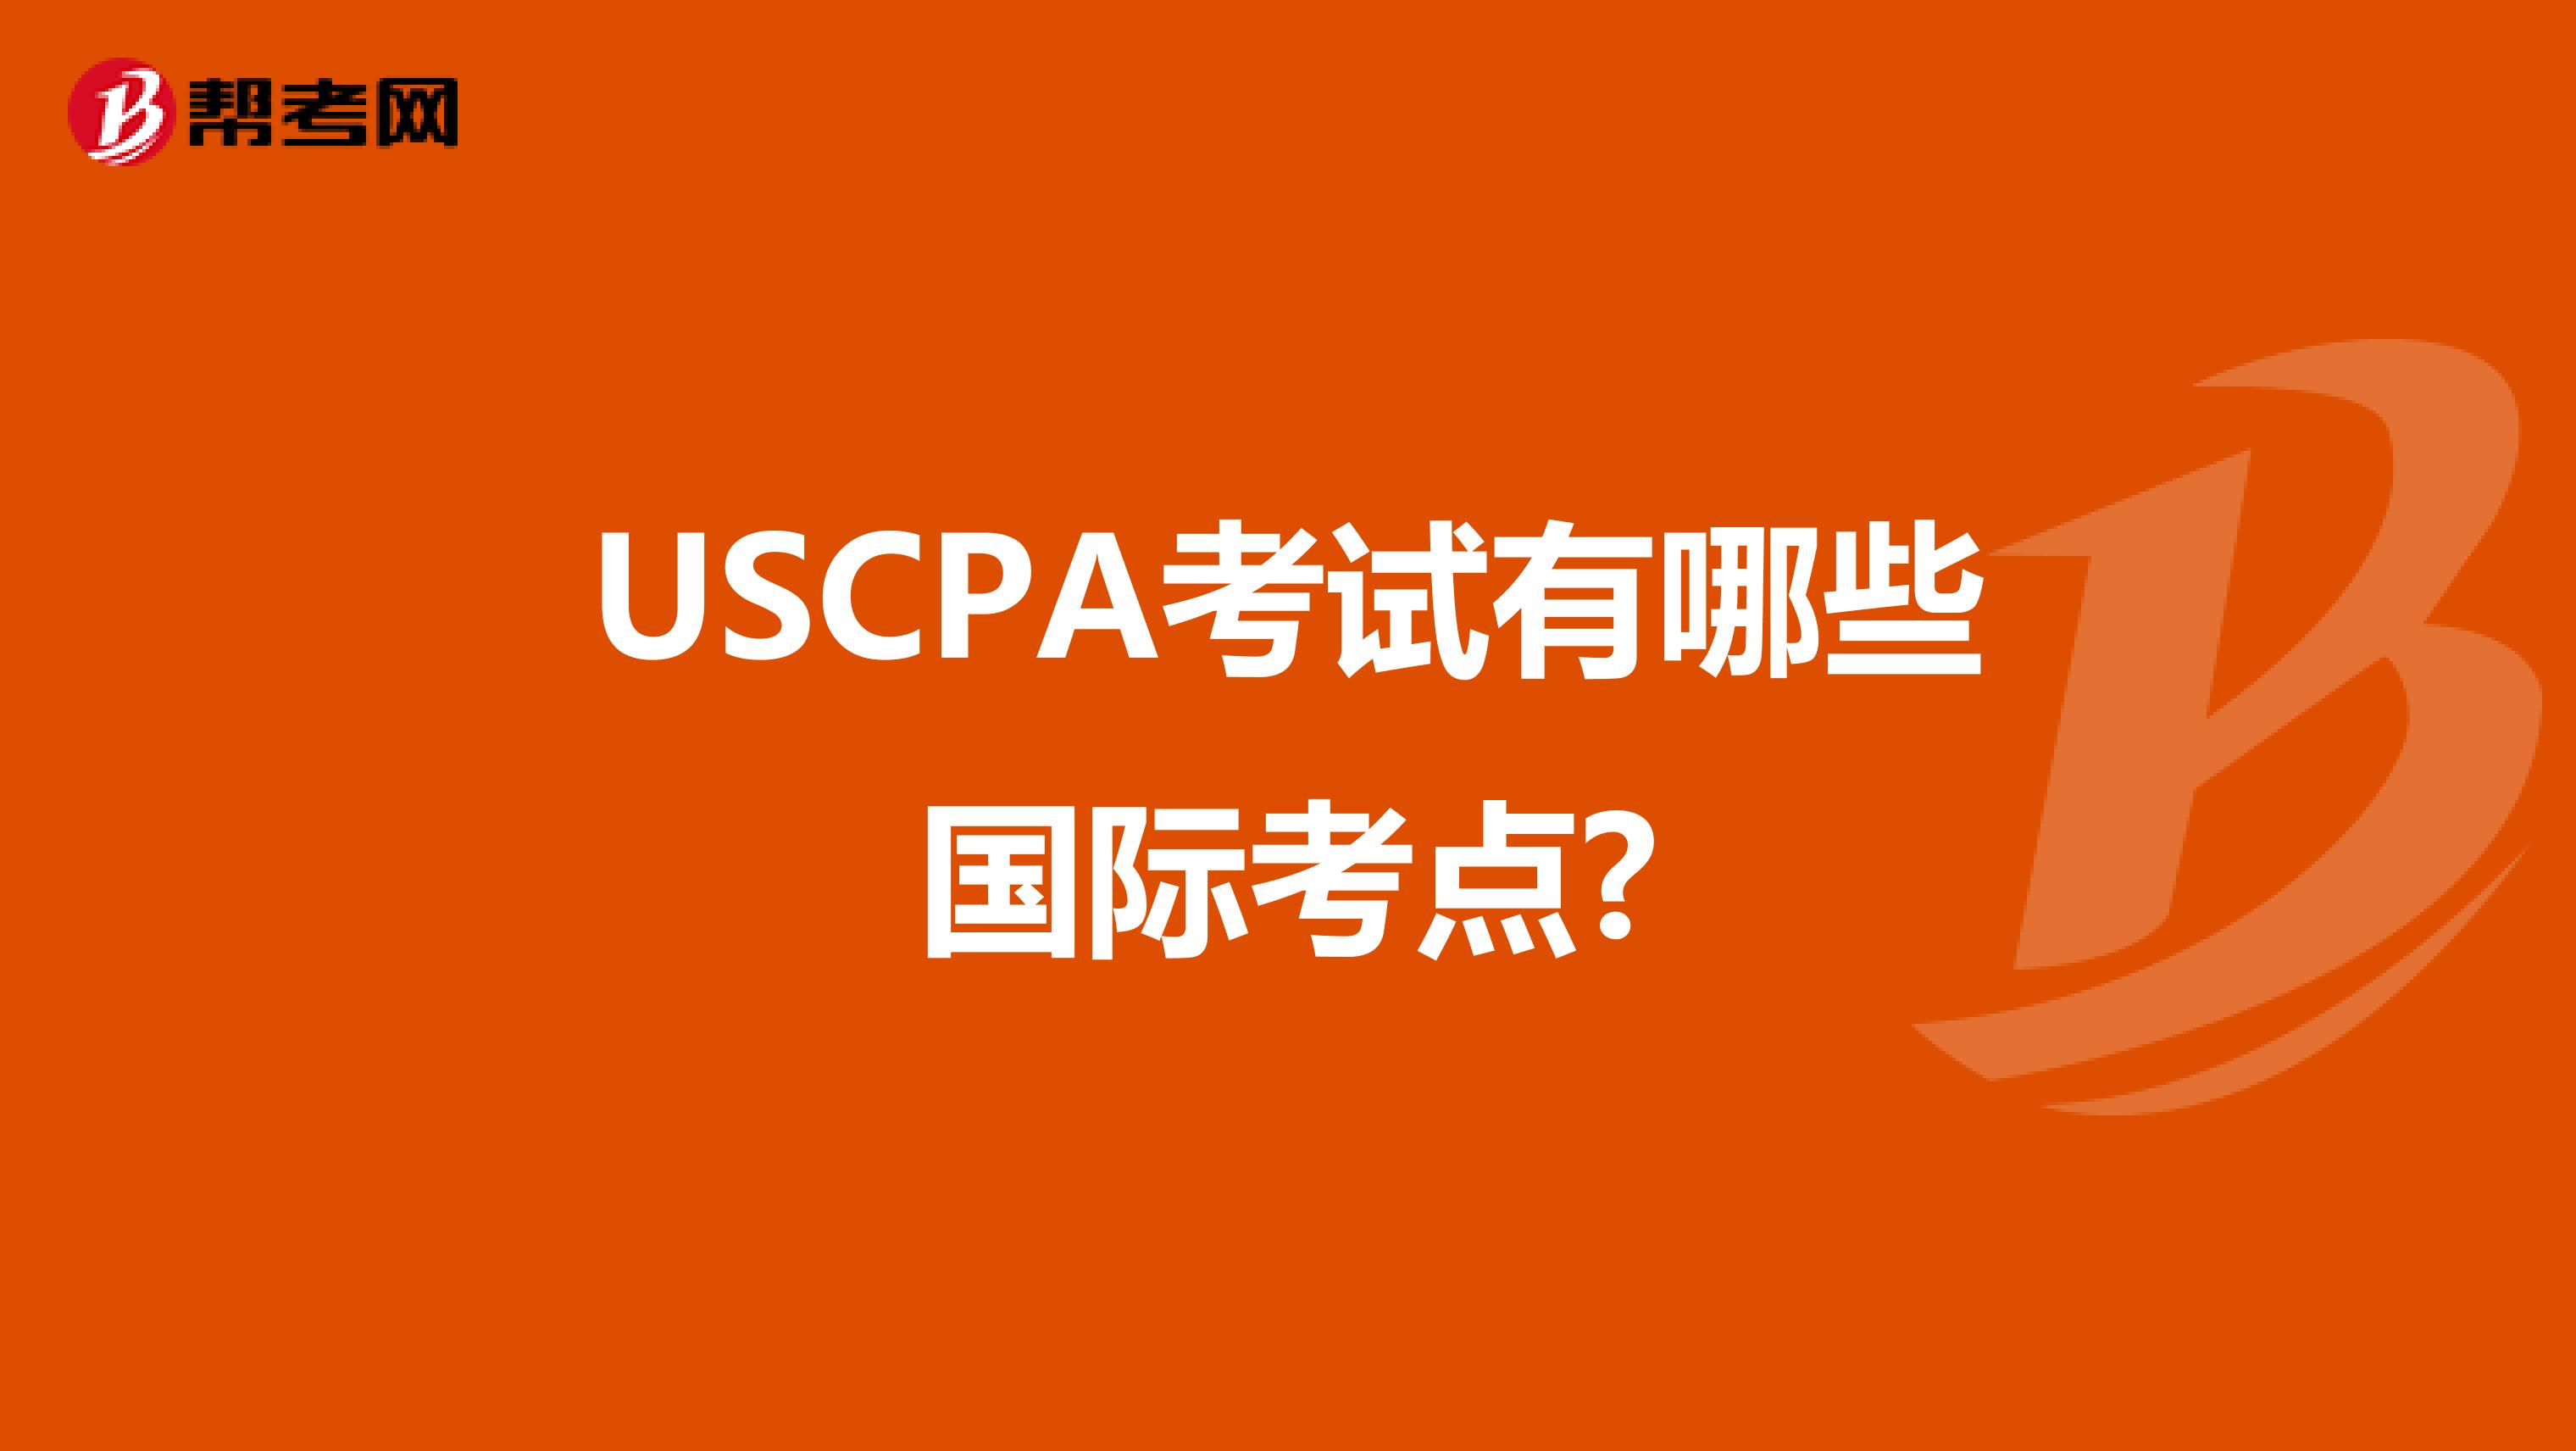 USCPA考试有哪些国际考点?